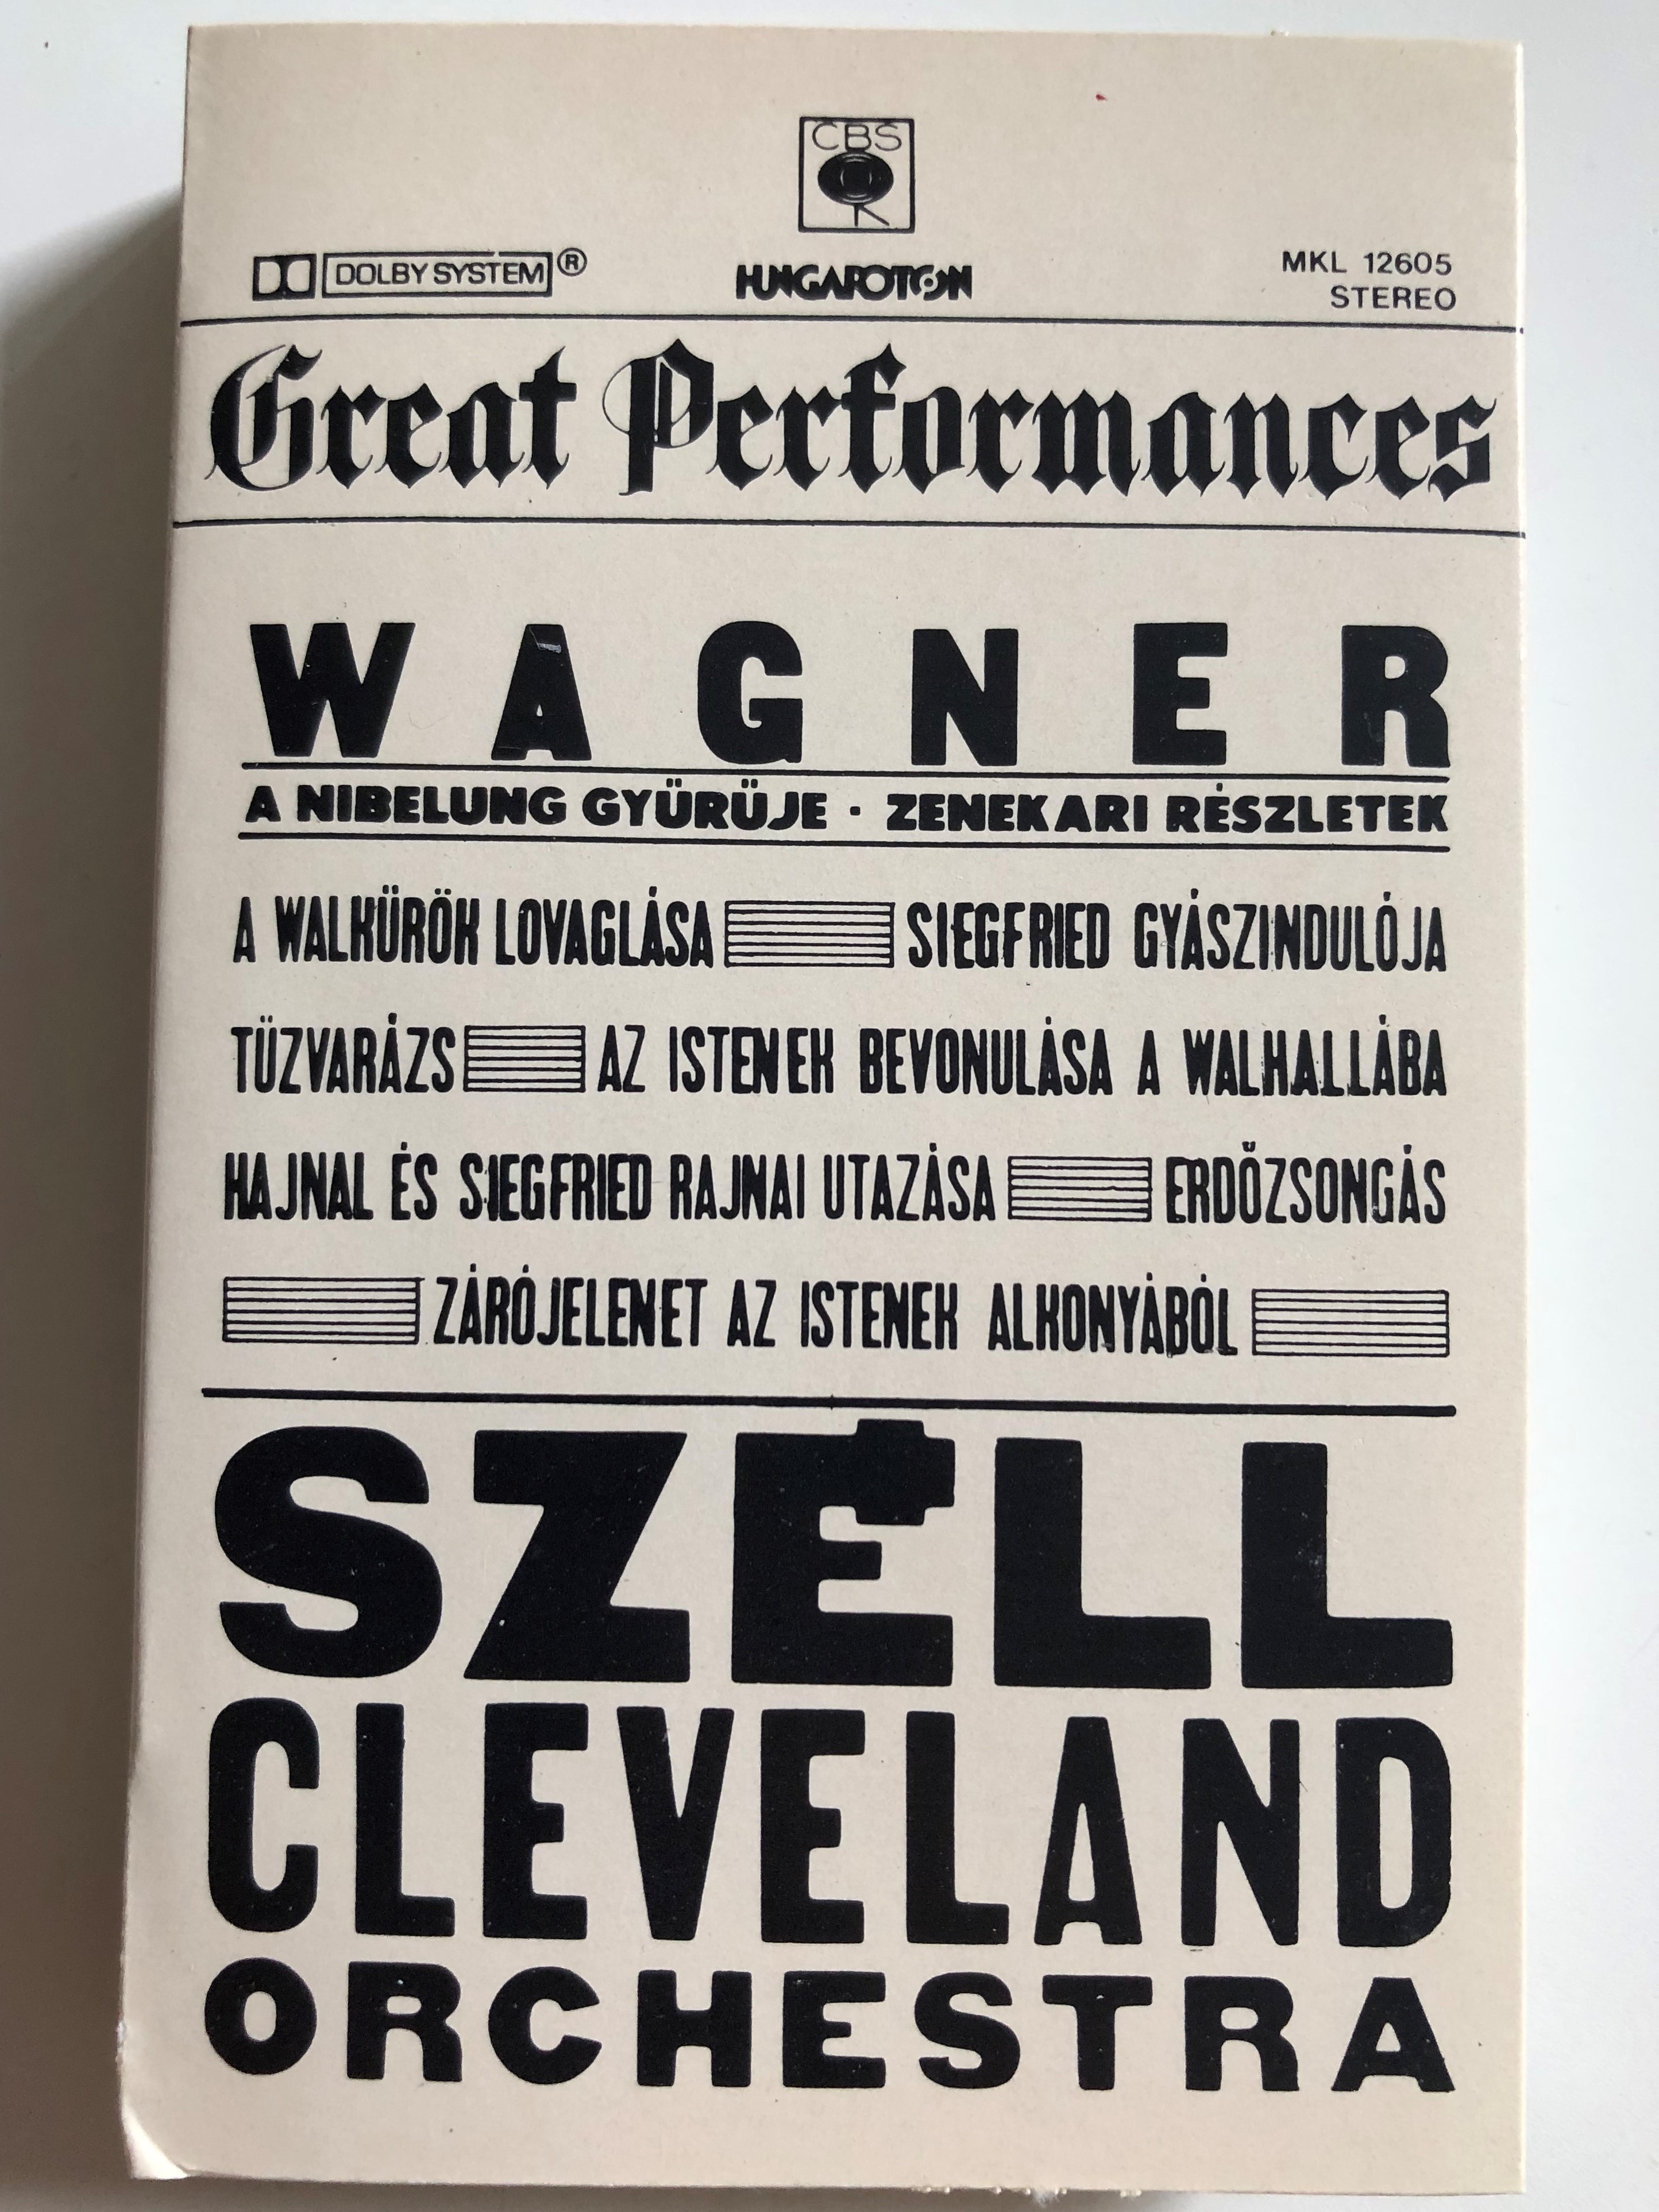 great-performances-wagner-a-nibelung-gy-r-je-zenekari-r-szletek-sz-ll-cleveland-orchestra-hungaroton-cassette-stereo-mkl-12605-1-.jpg